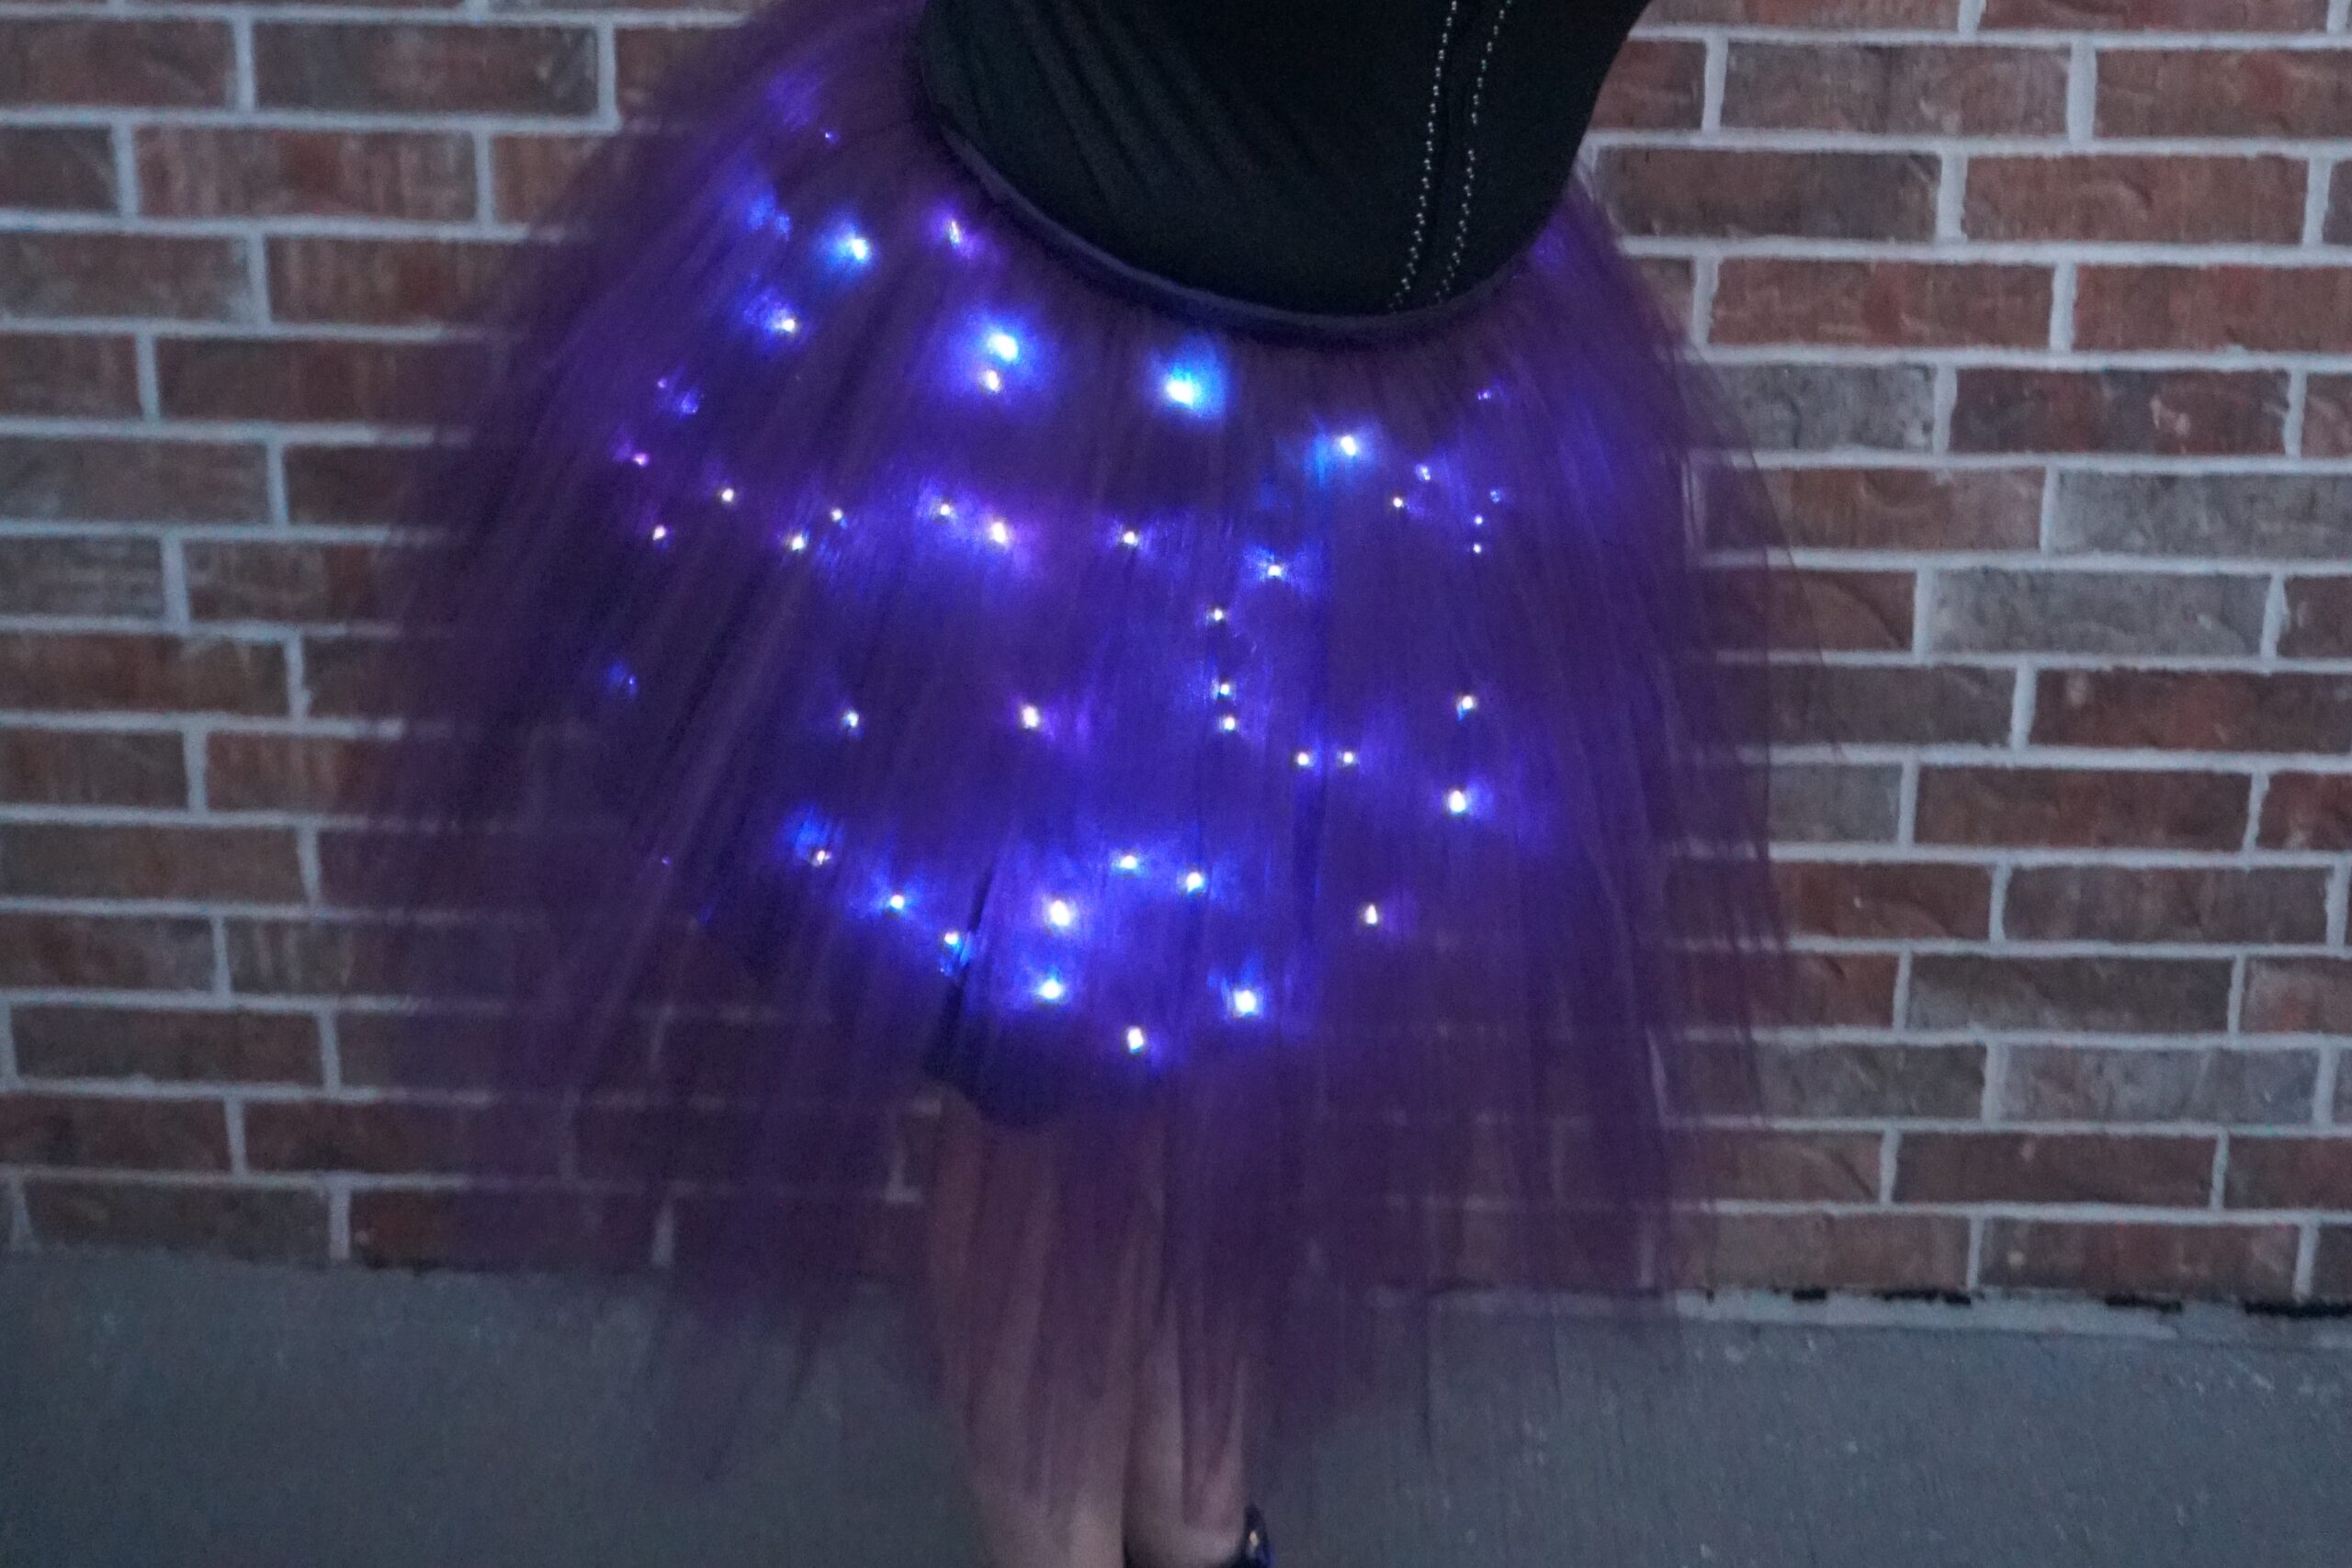 a Light-up Tulle skirt - Wearable Technology